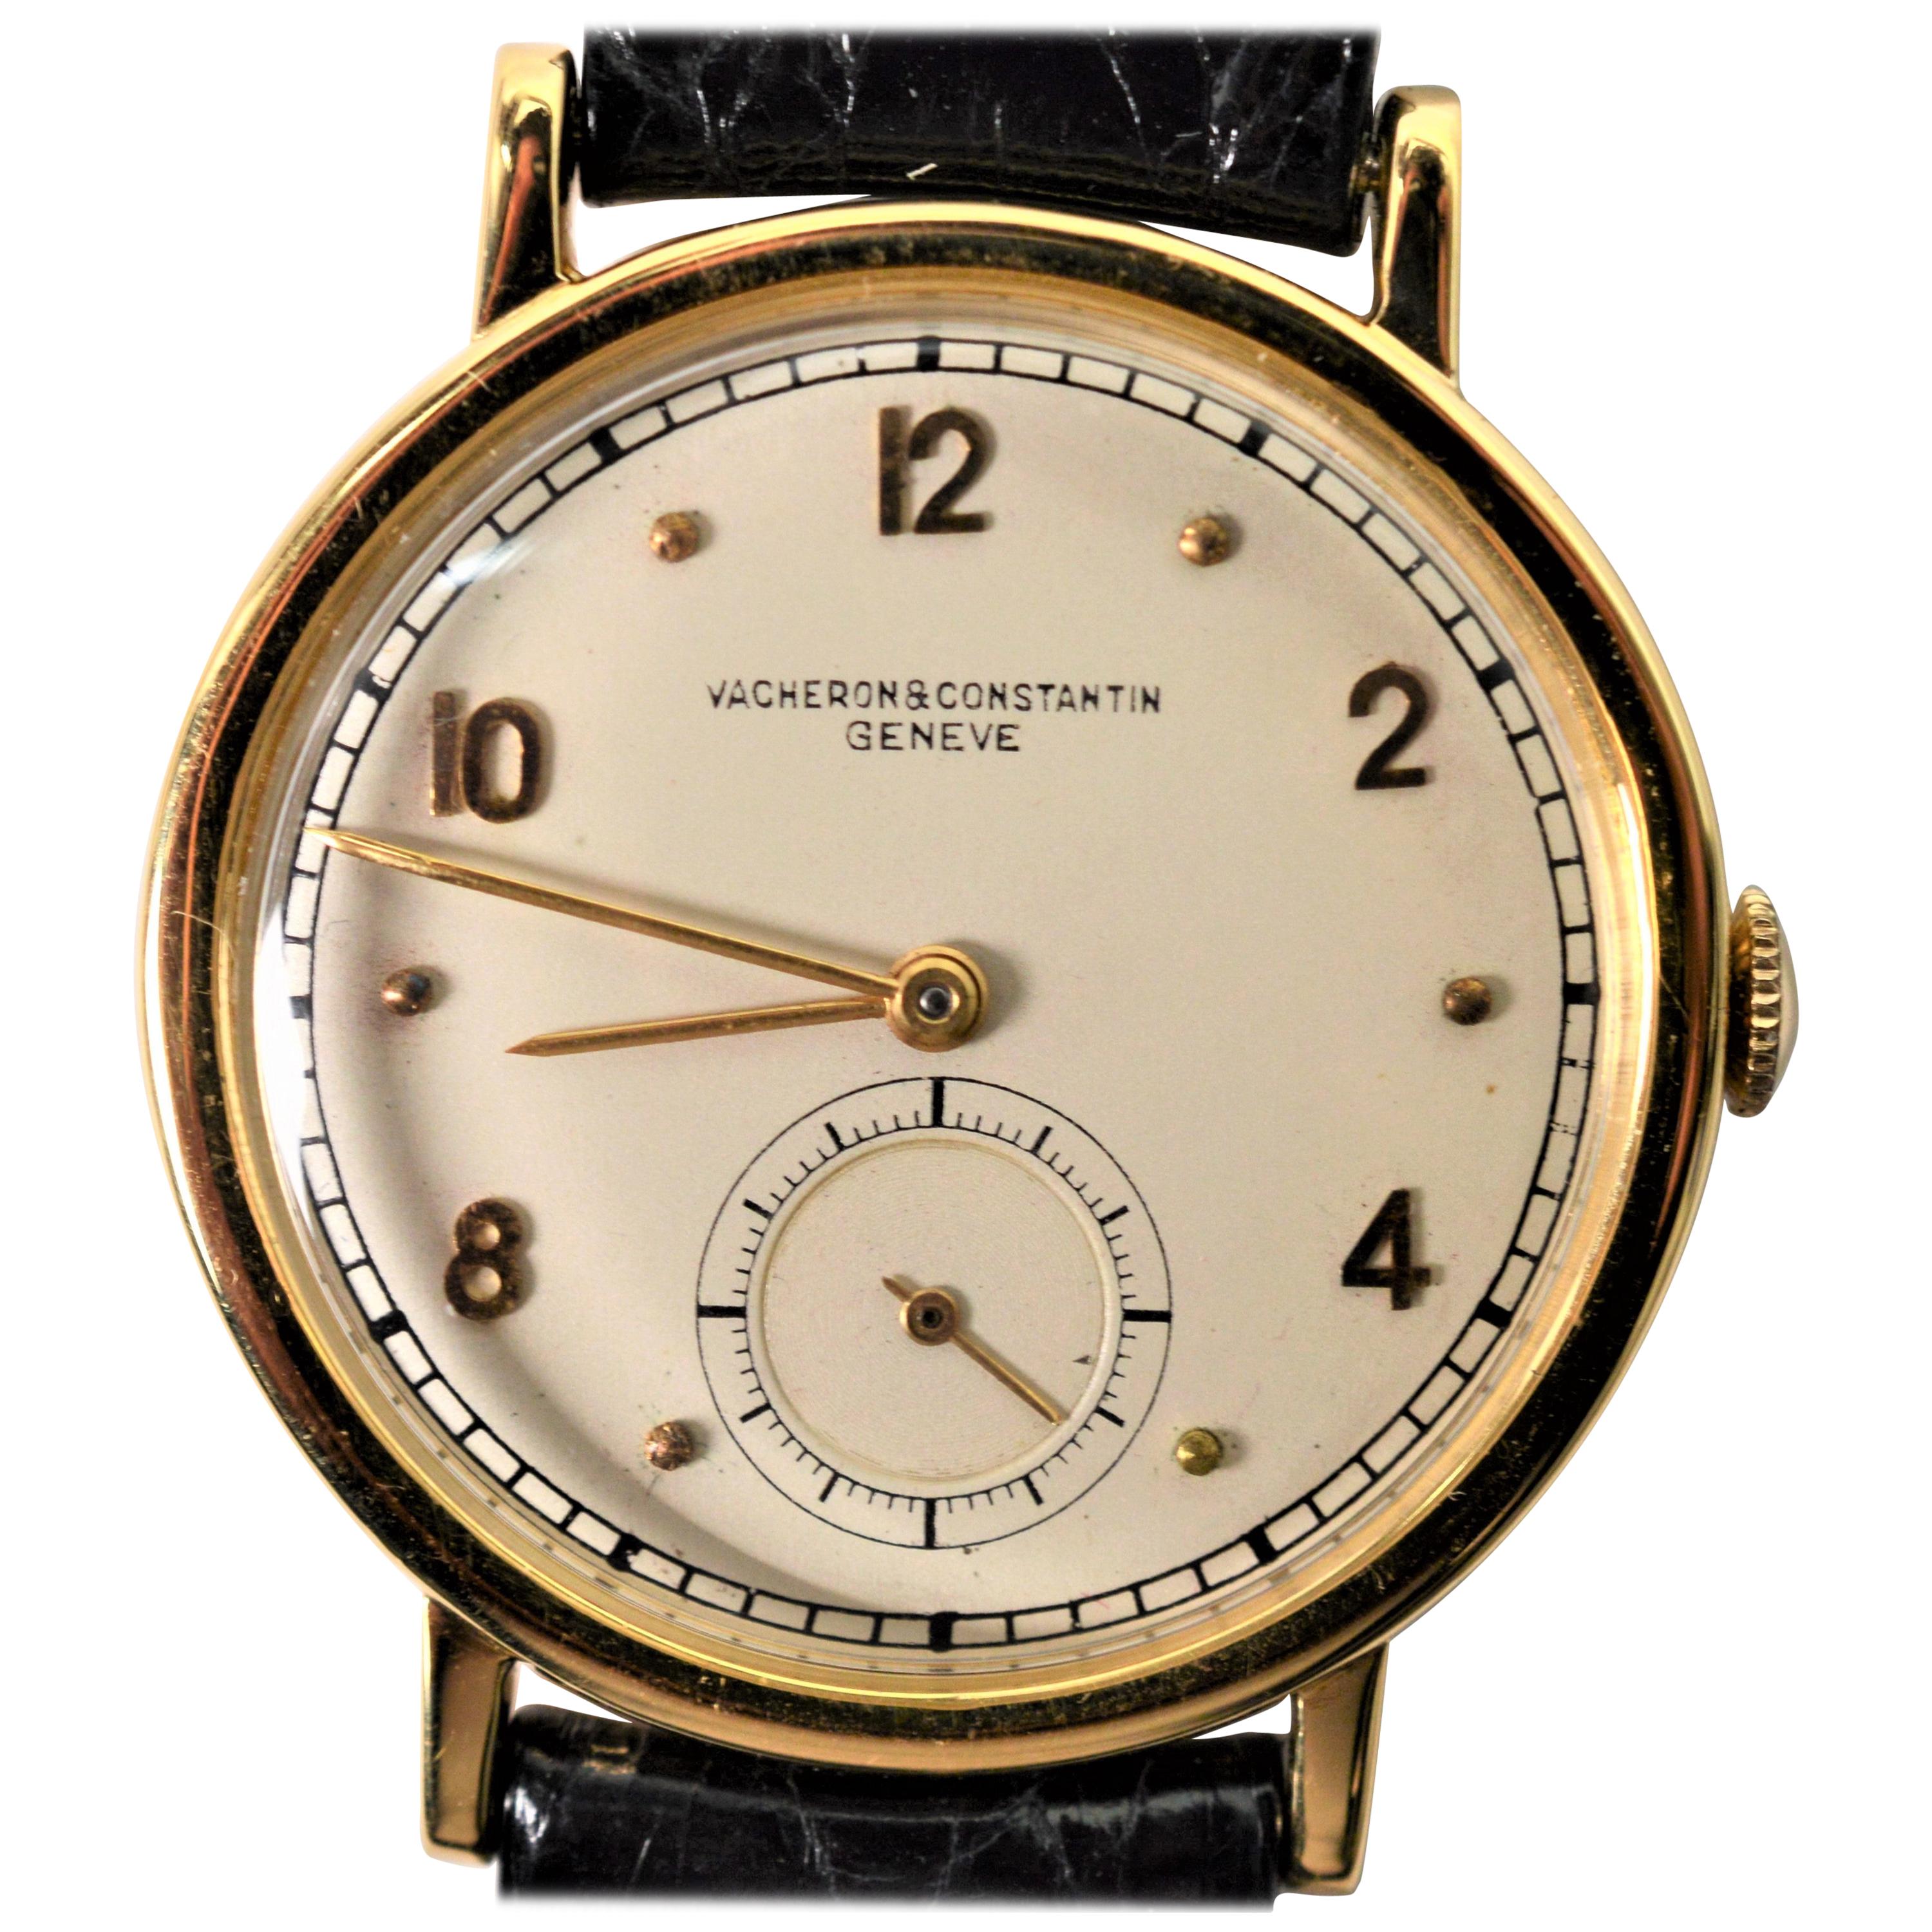 Vacheron & Constantin Geneve Yellow Gold Men's Wristwatch